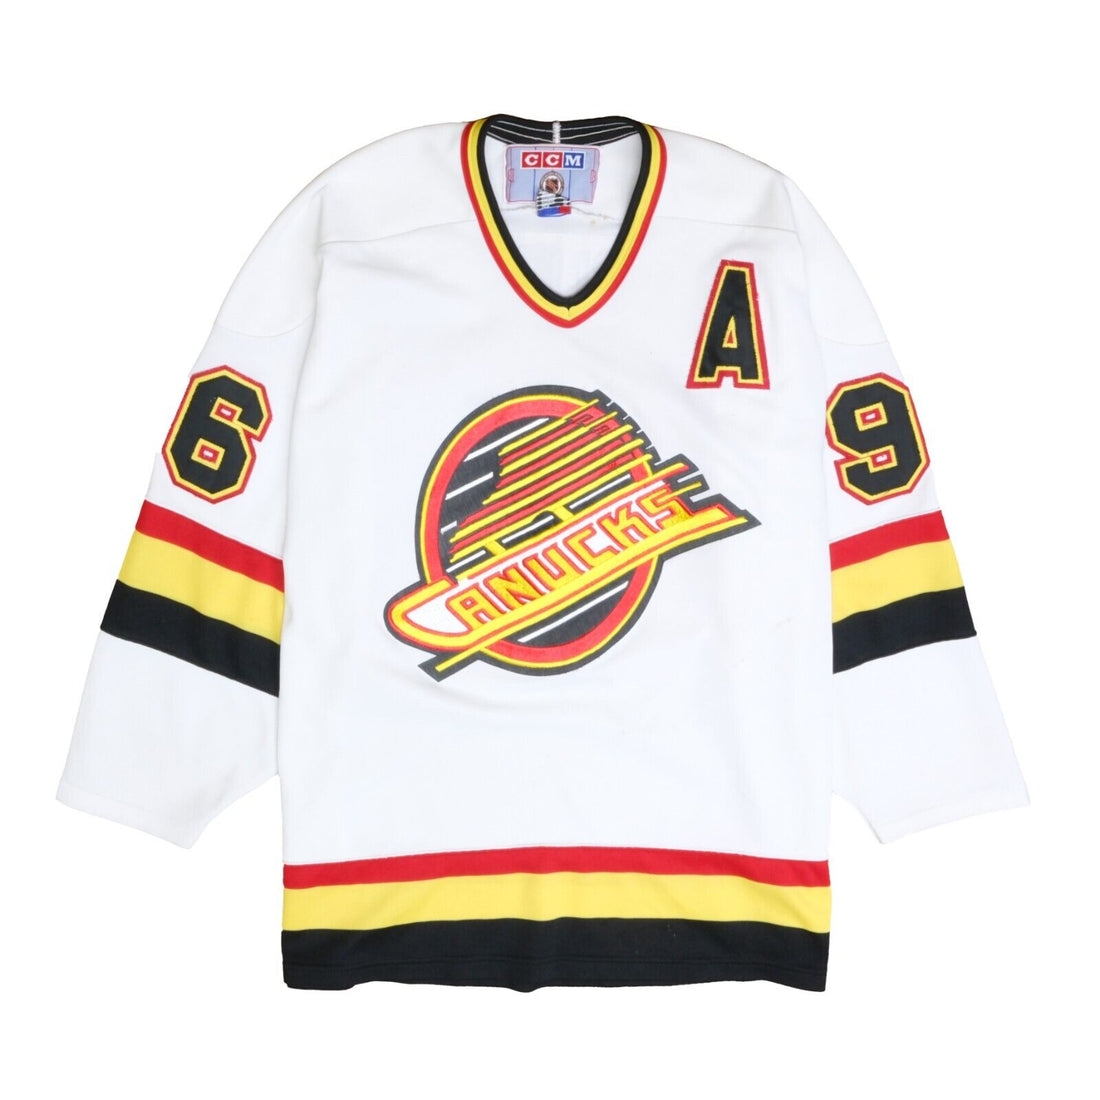 vancouver canucks pavel bure ccm nhl hockey jersey size XL used